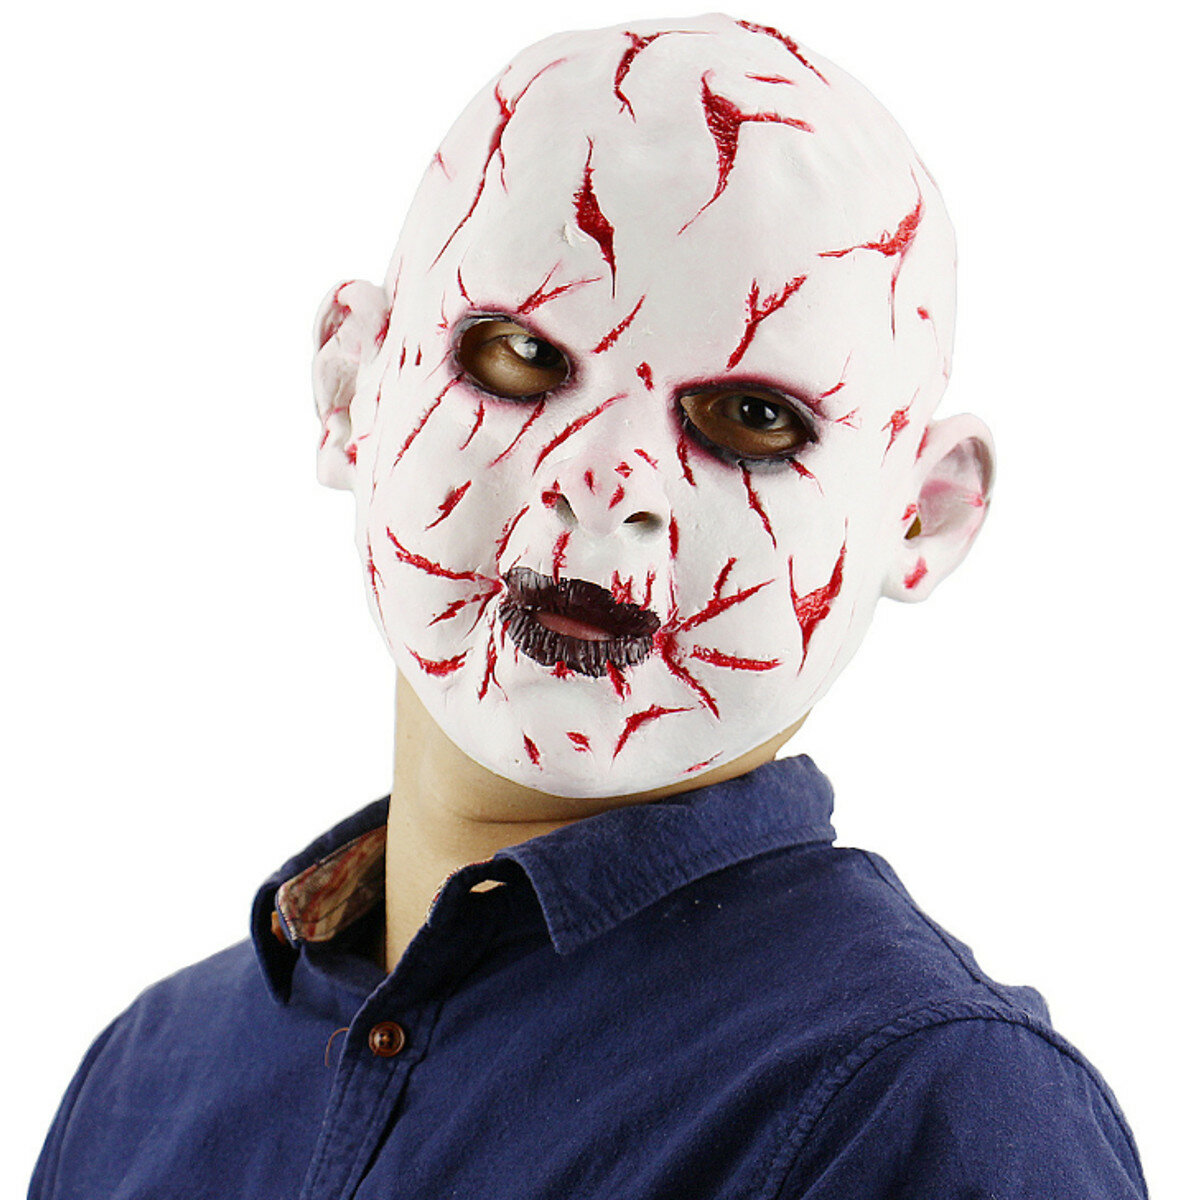 

Scary Creepy Halloween Face Mask Masquerade Horror Baby Chucky Ghost Doll Mask